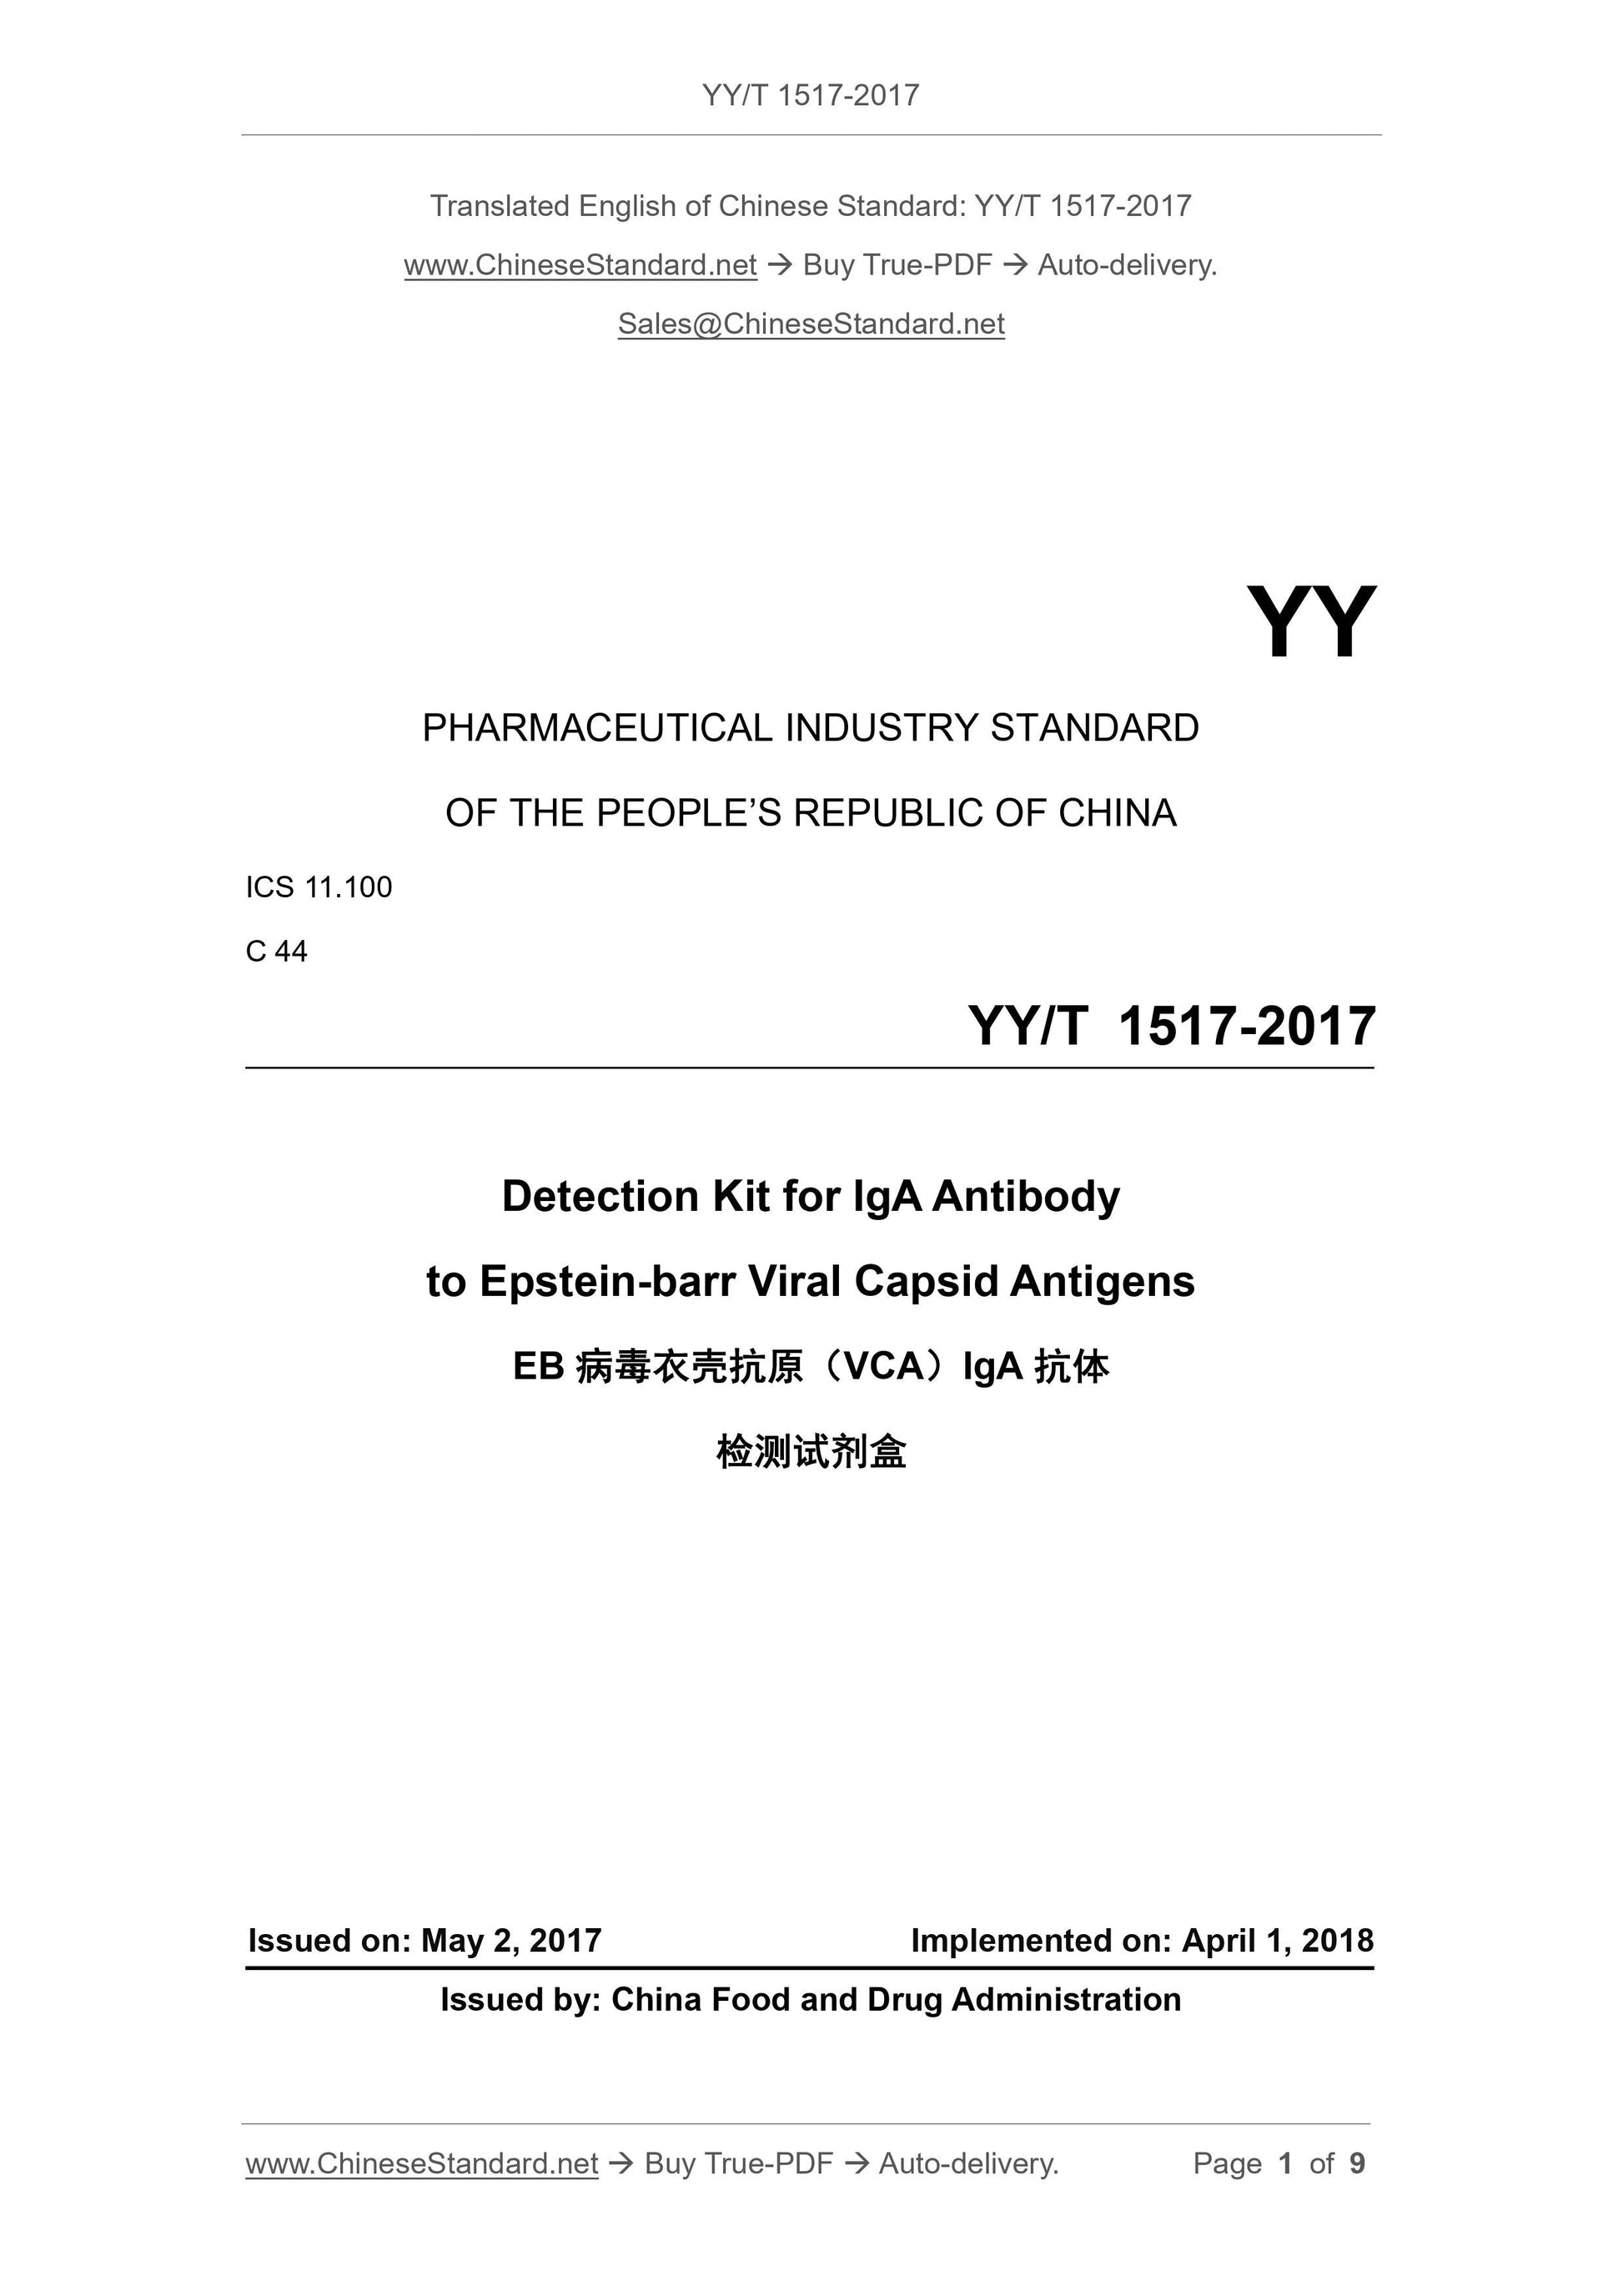 YY/T 1517-2017 Page 1